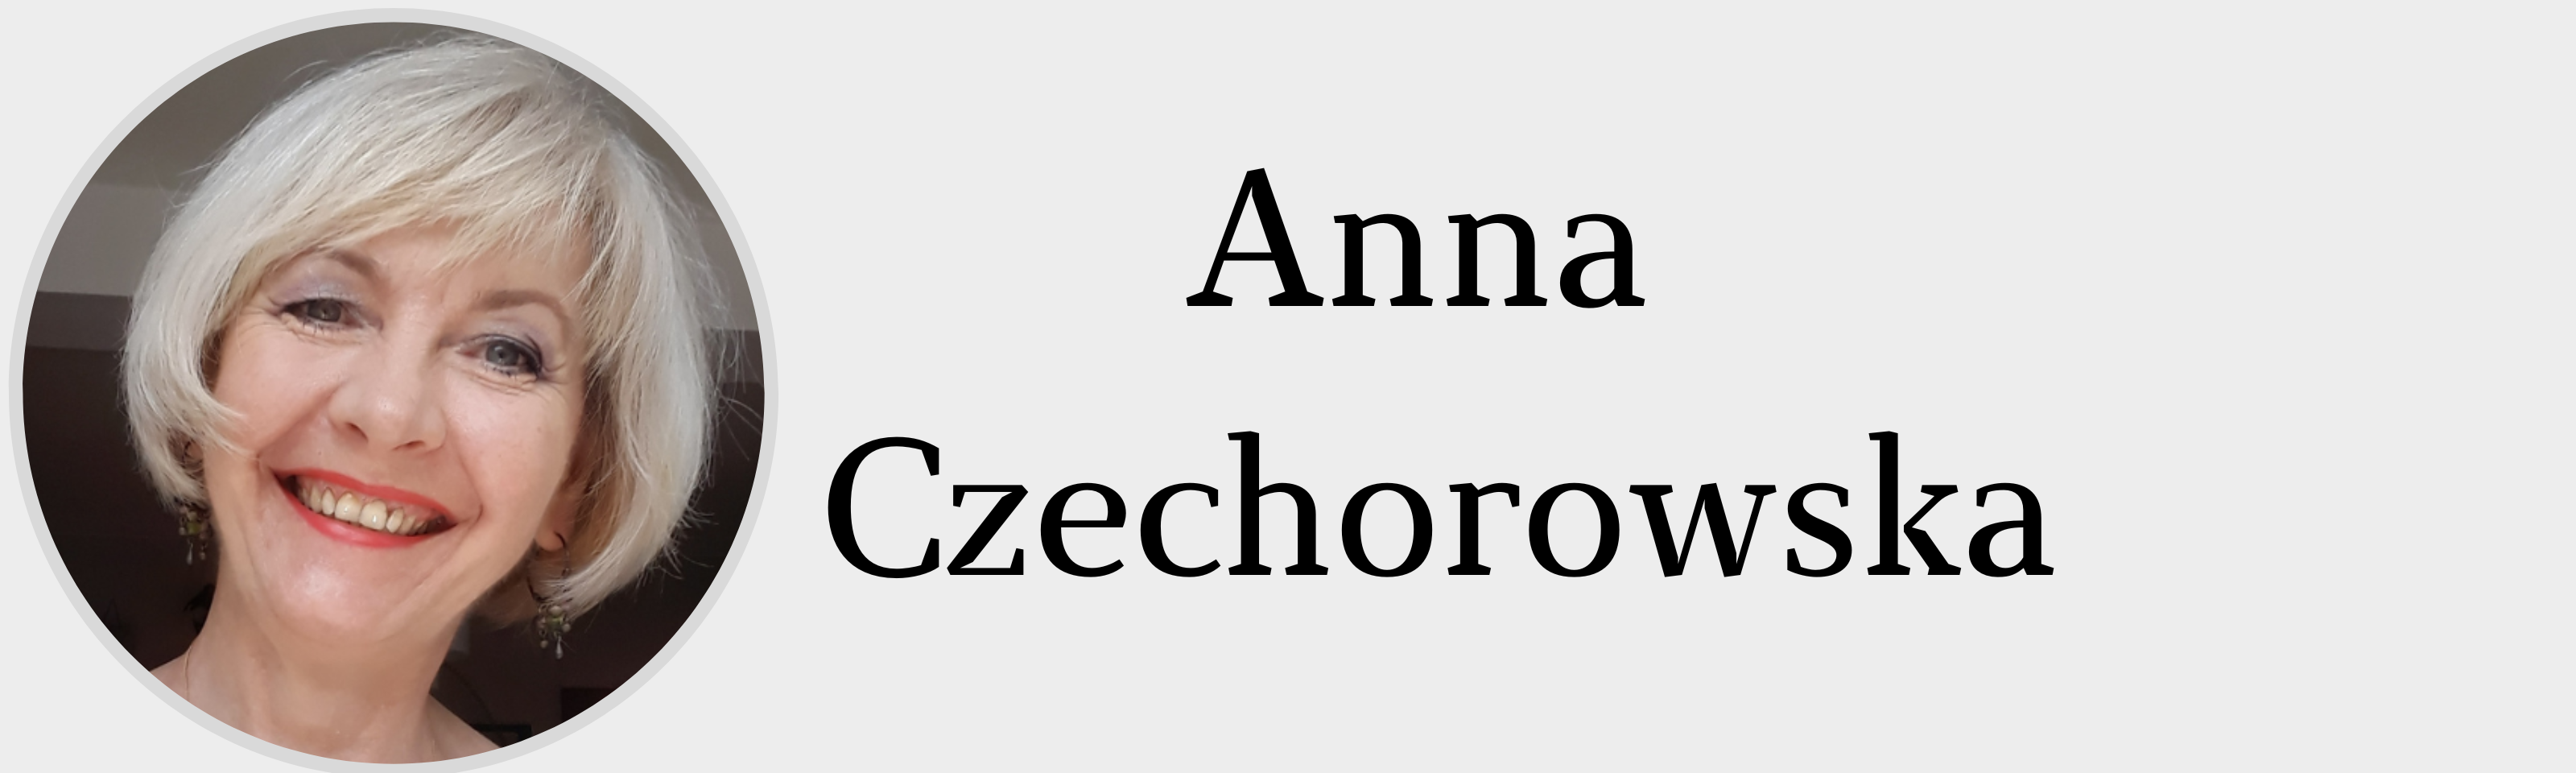 Anna Czechorowska